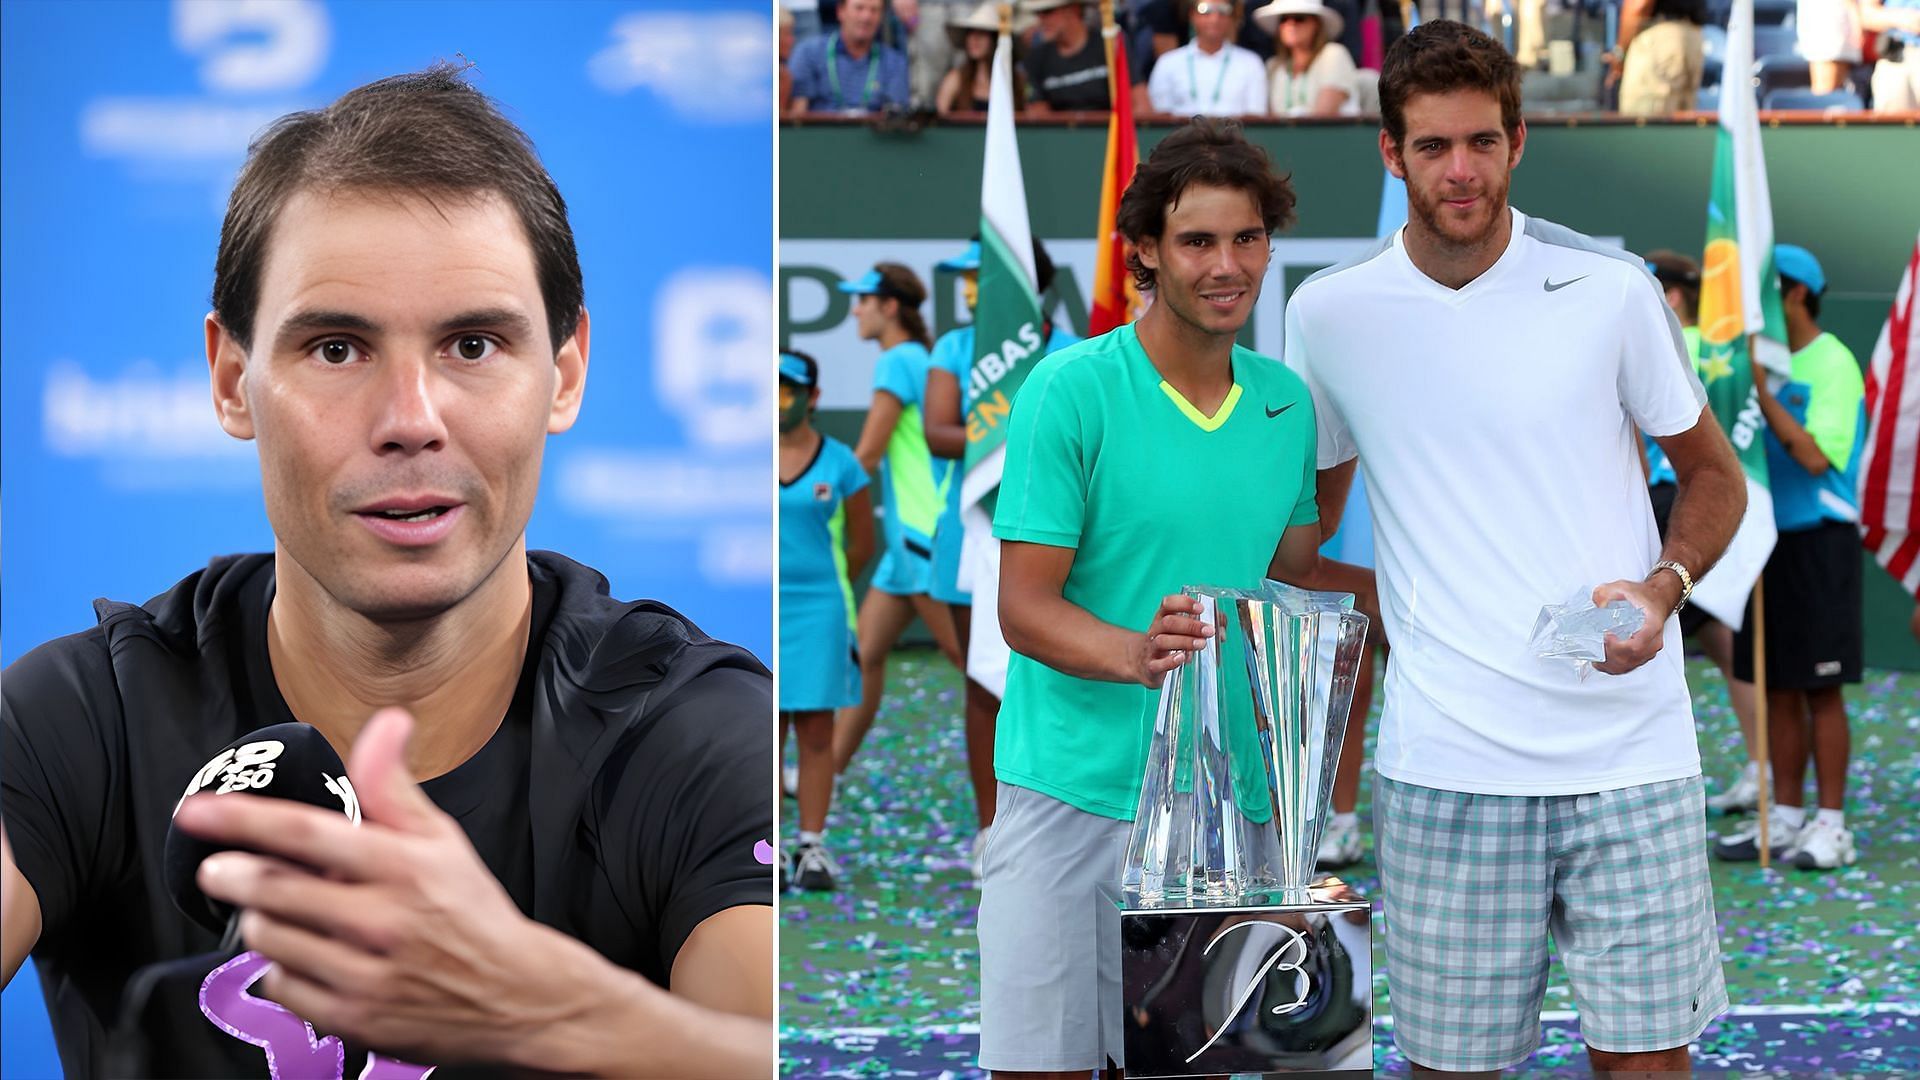 Rafael Nadal beat Juan Martin del Potro to win the 2013 Indian Wells title.